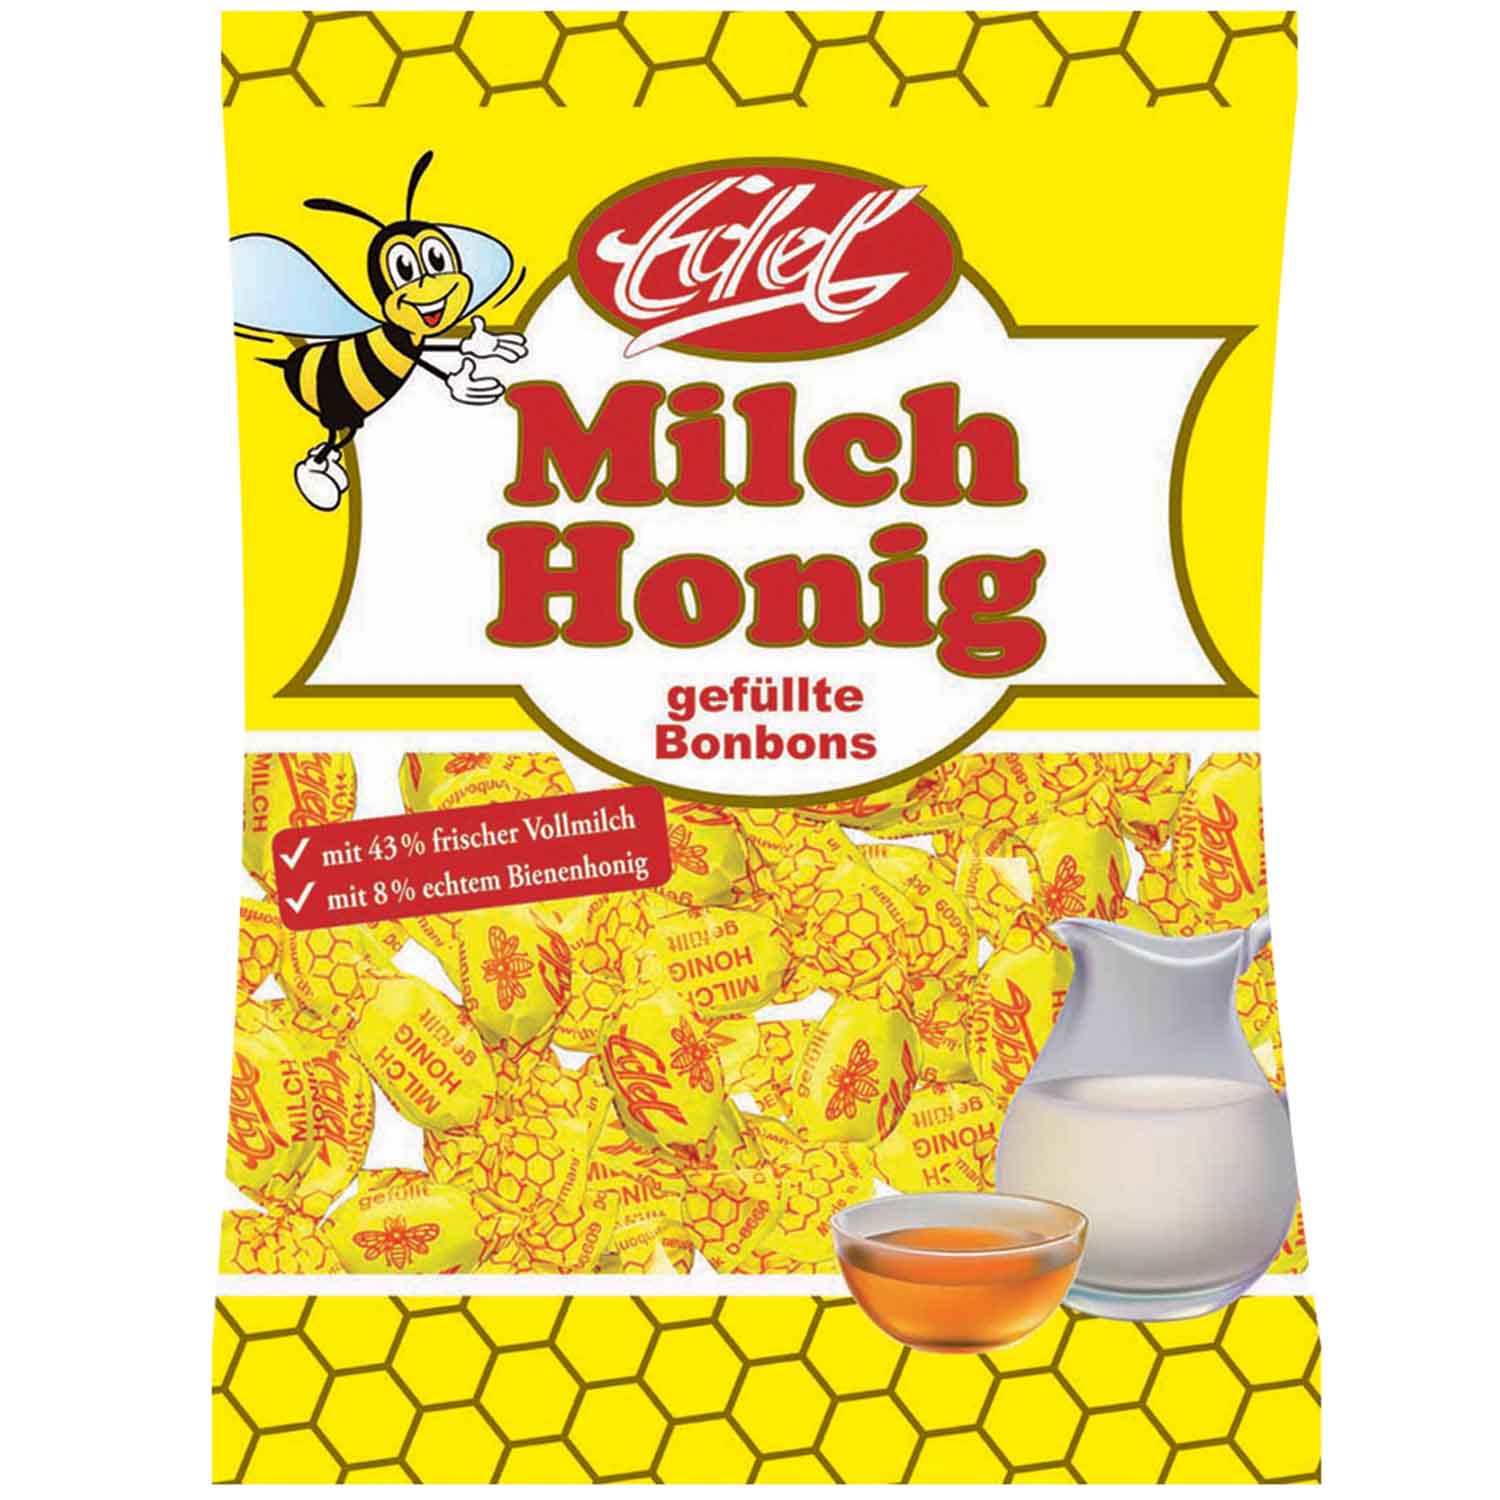 Edel Milch Honig Bonbons 90g | Online kaufen im World of Sweets Shop